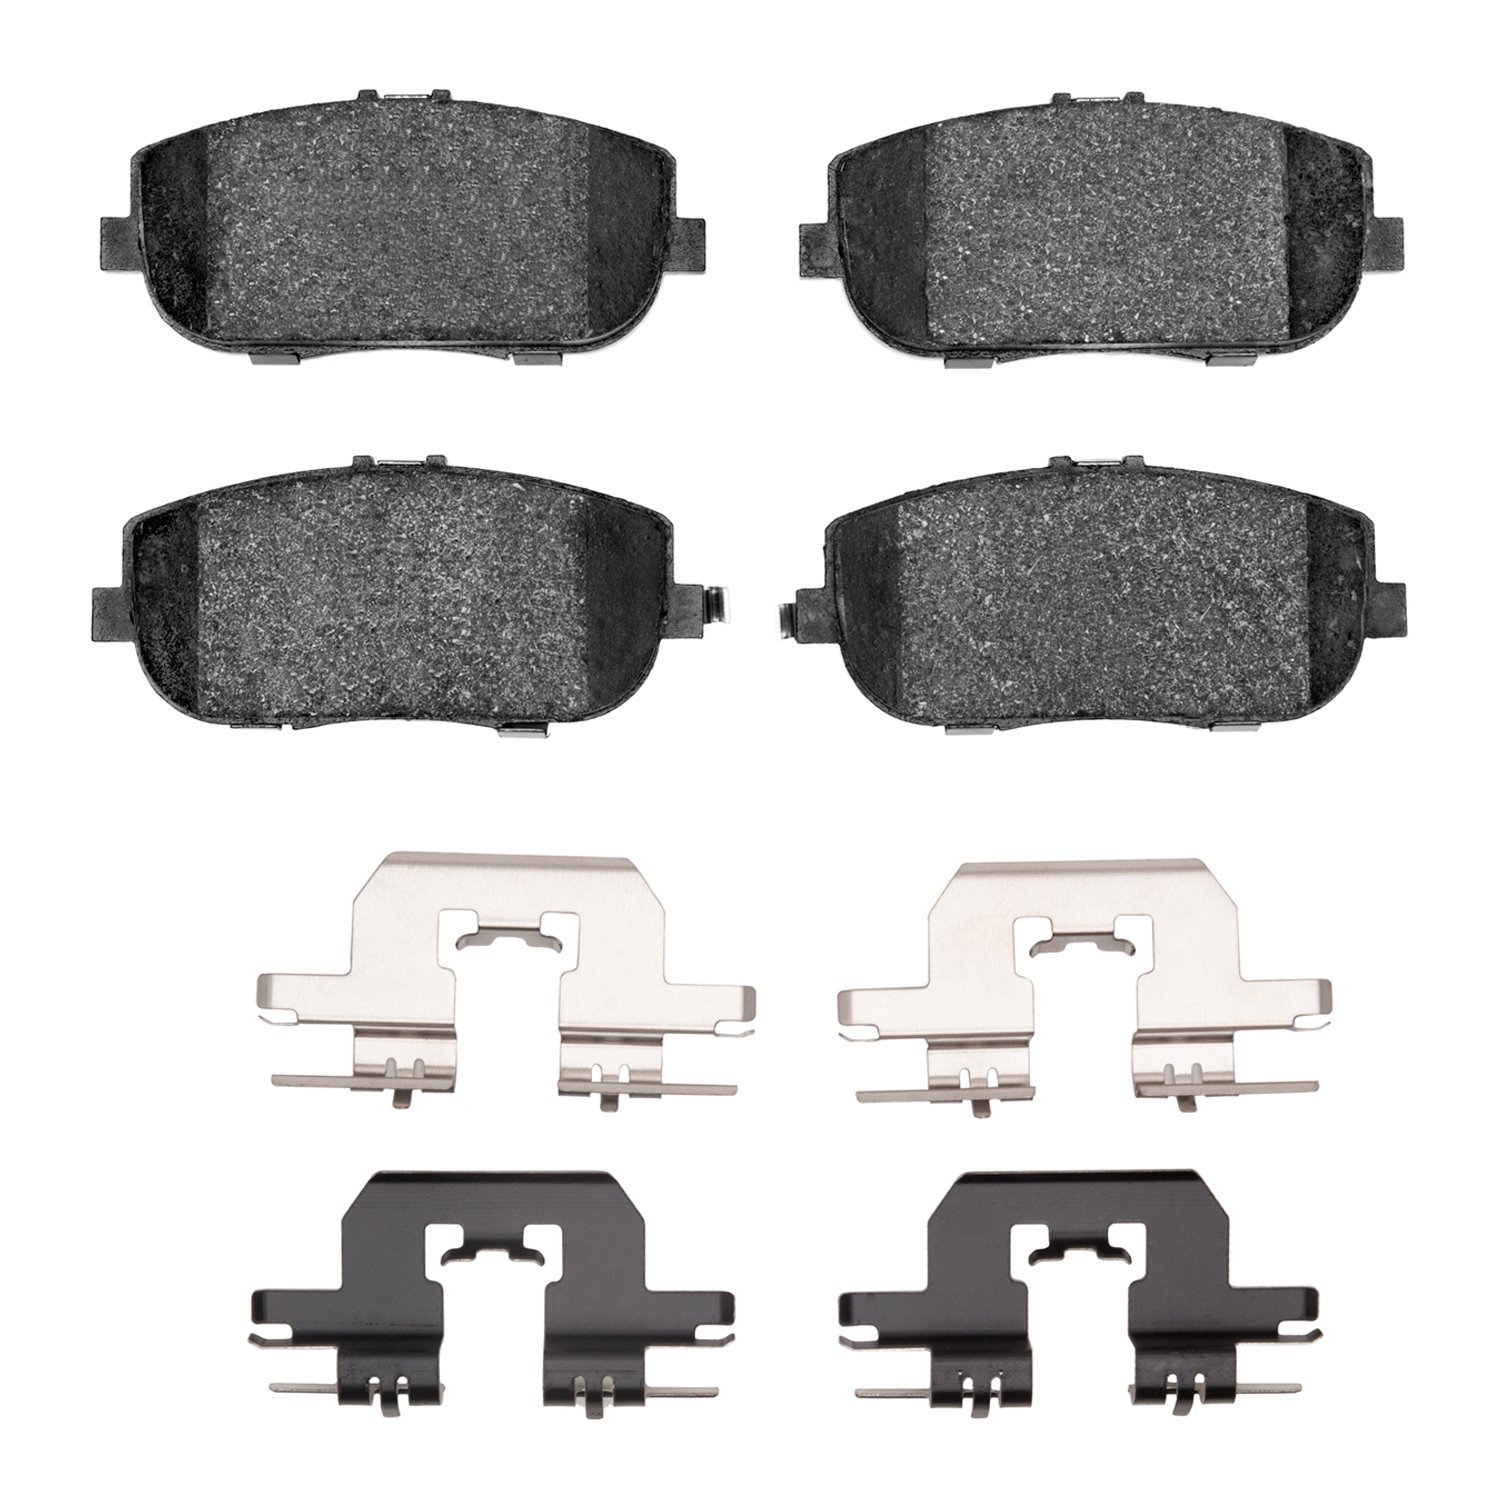 1115-1180-01 Active Performance Brake Pads & Hardware Kit, Fits Select Multiple Makes/Models, Position: Rear